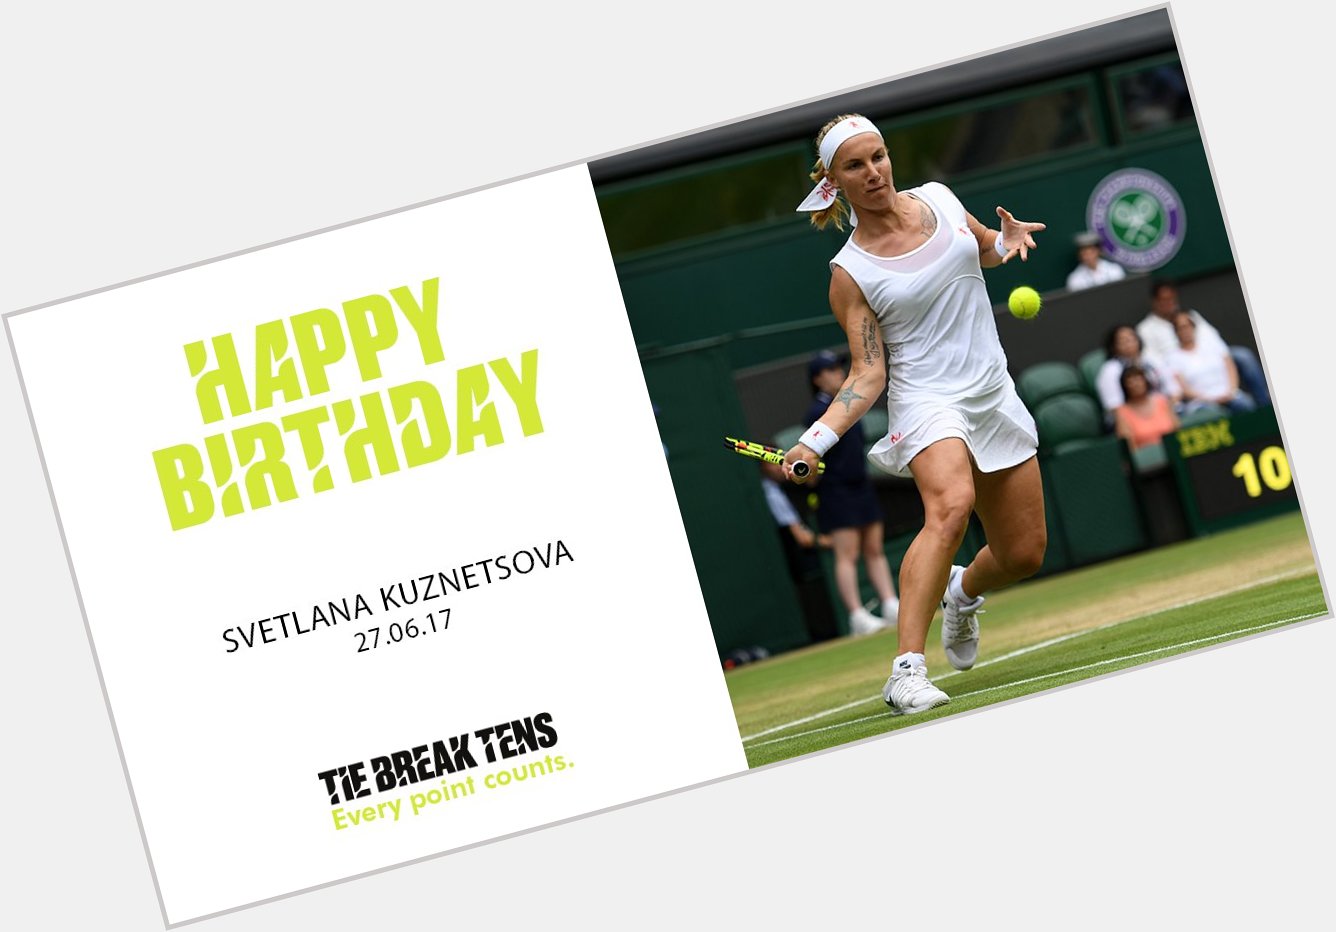 Happy Birthday to our finalist Svetlana Kuznetsova! We hope you have an incredible day! 